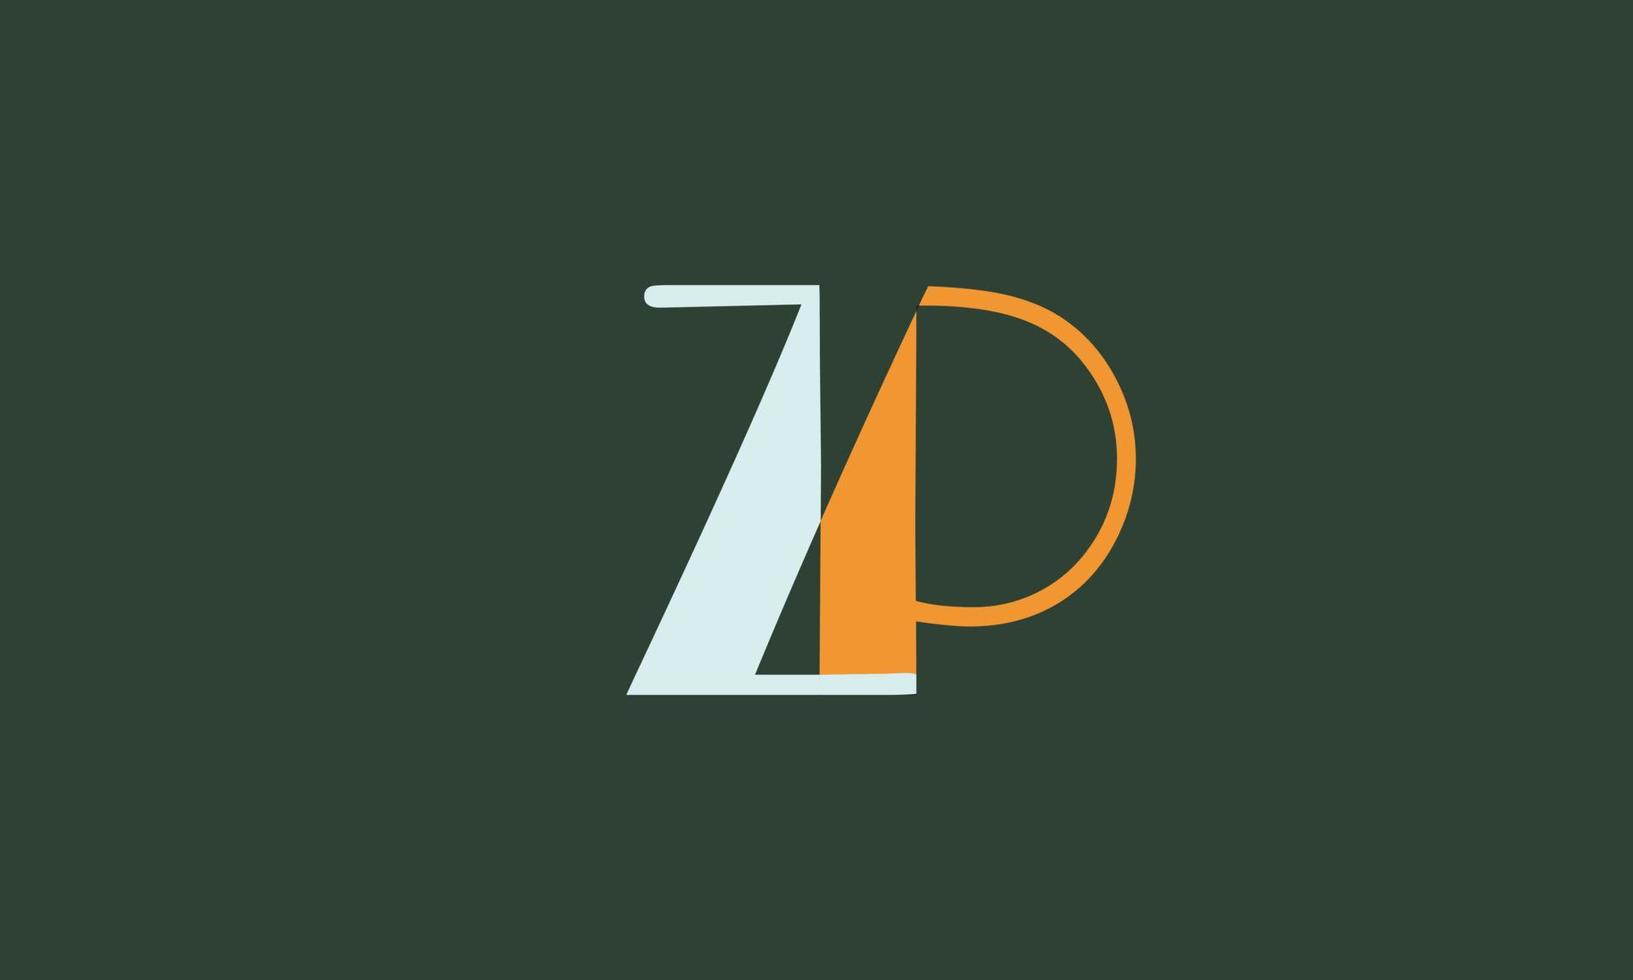 ZP Alphabet letters Initials Monogram logo vector